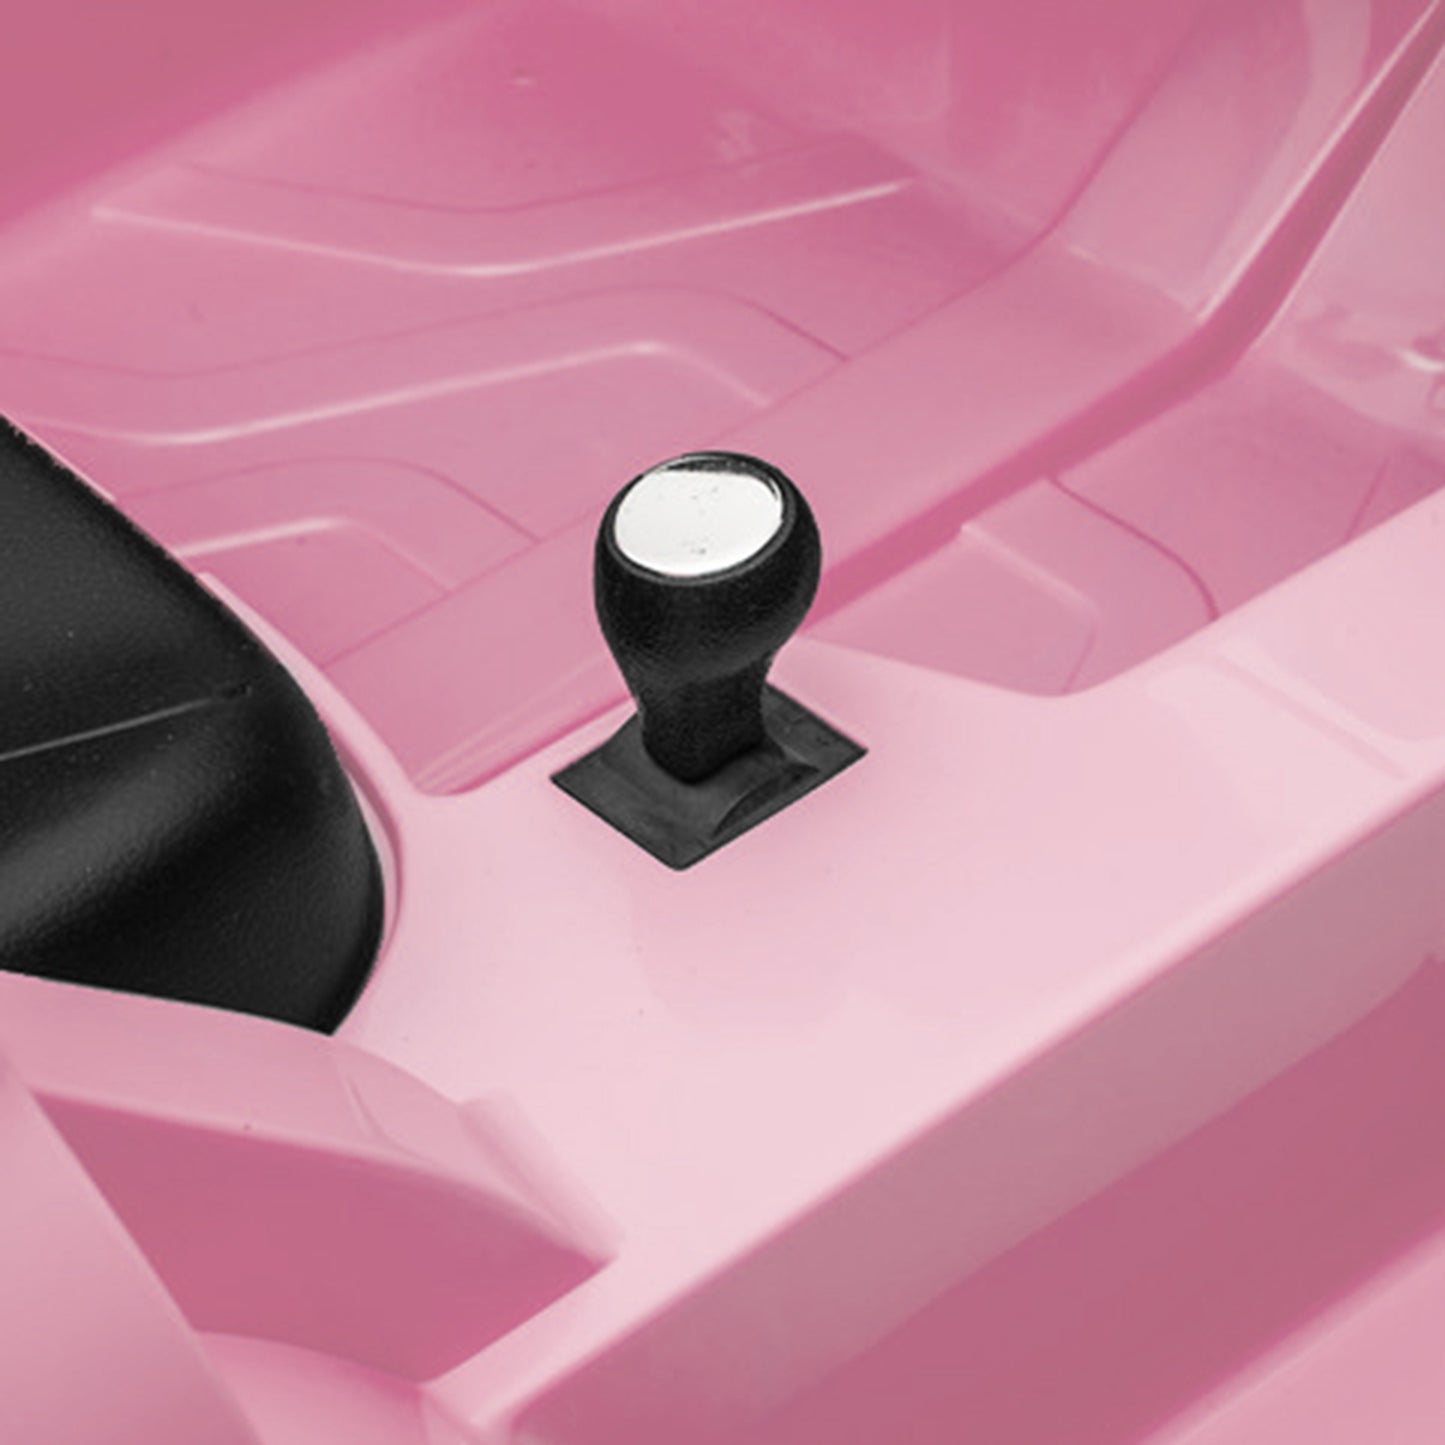 Aston Martin Coche eléctrico para niños con control remoto de doble tracción de 12 V, coche para niños con batería rosa, vehículo de juguetes para niños de 4 ruedas, faros LED, control remoto, música, USB